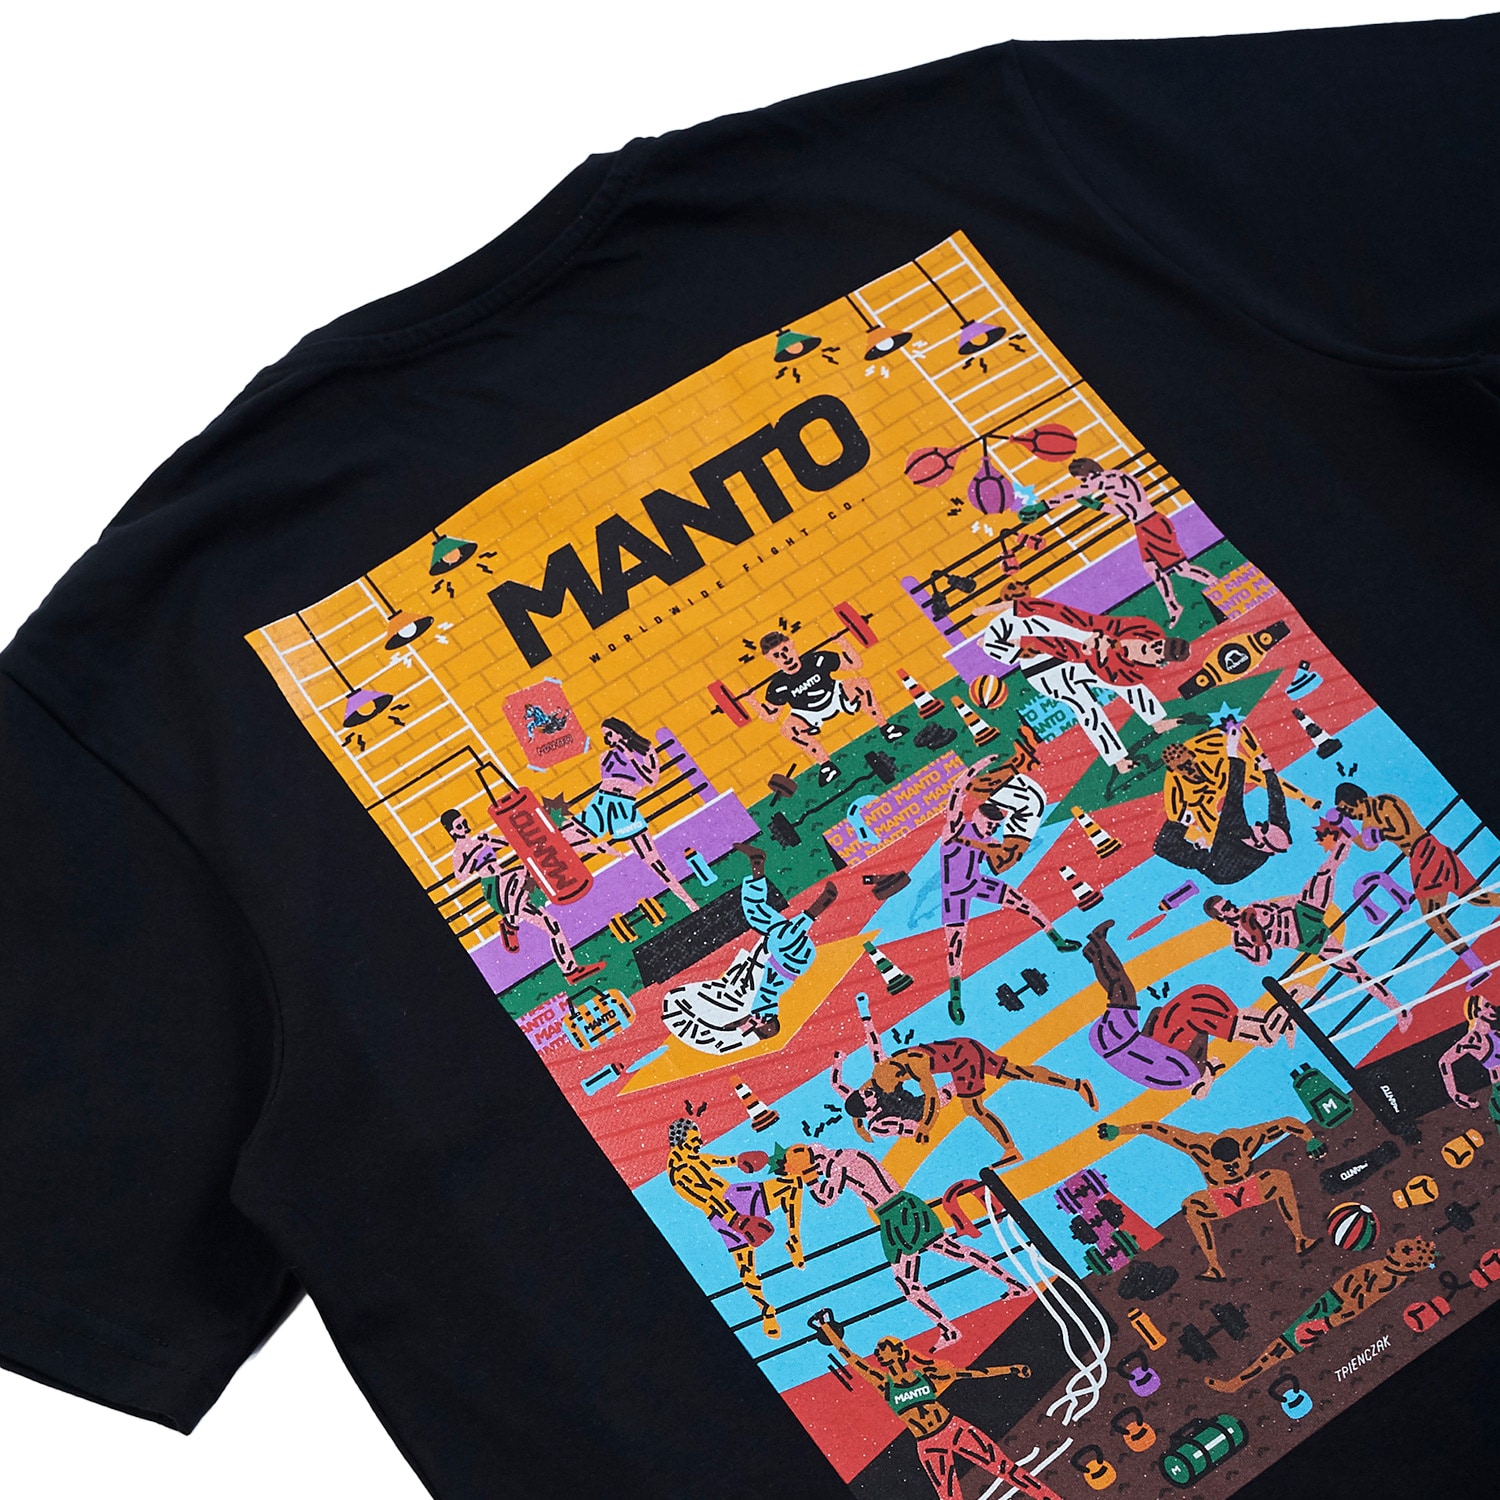 Koszulka T-shirt Manto Gym 2.0 - Black